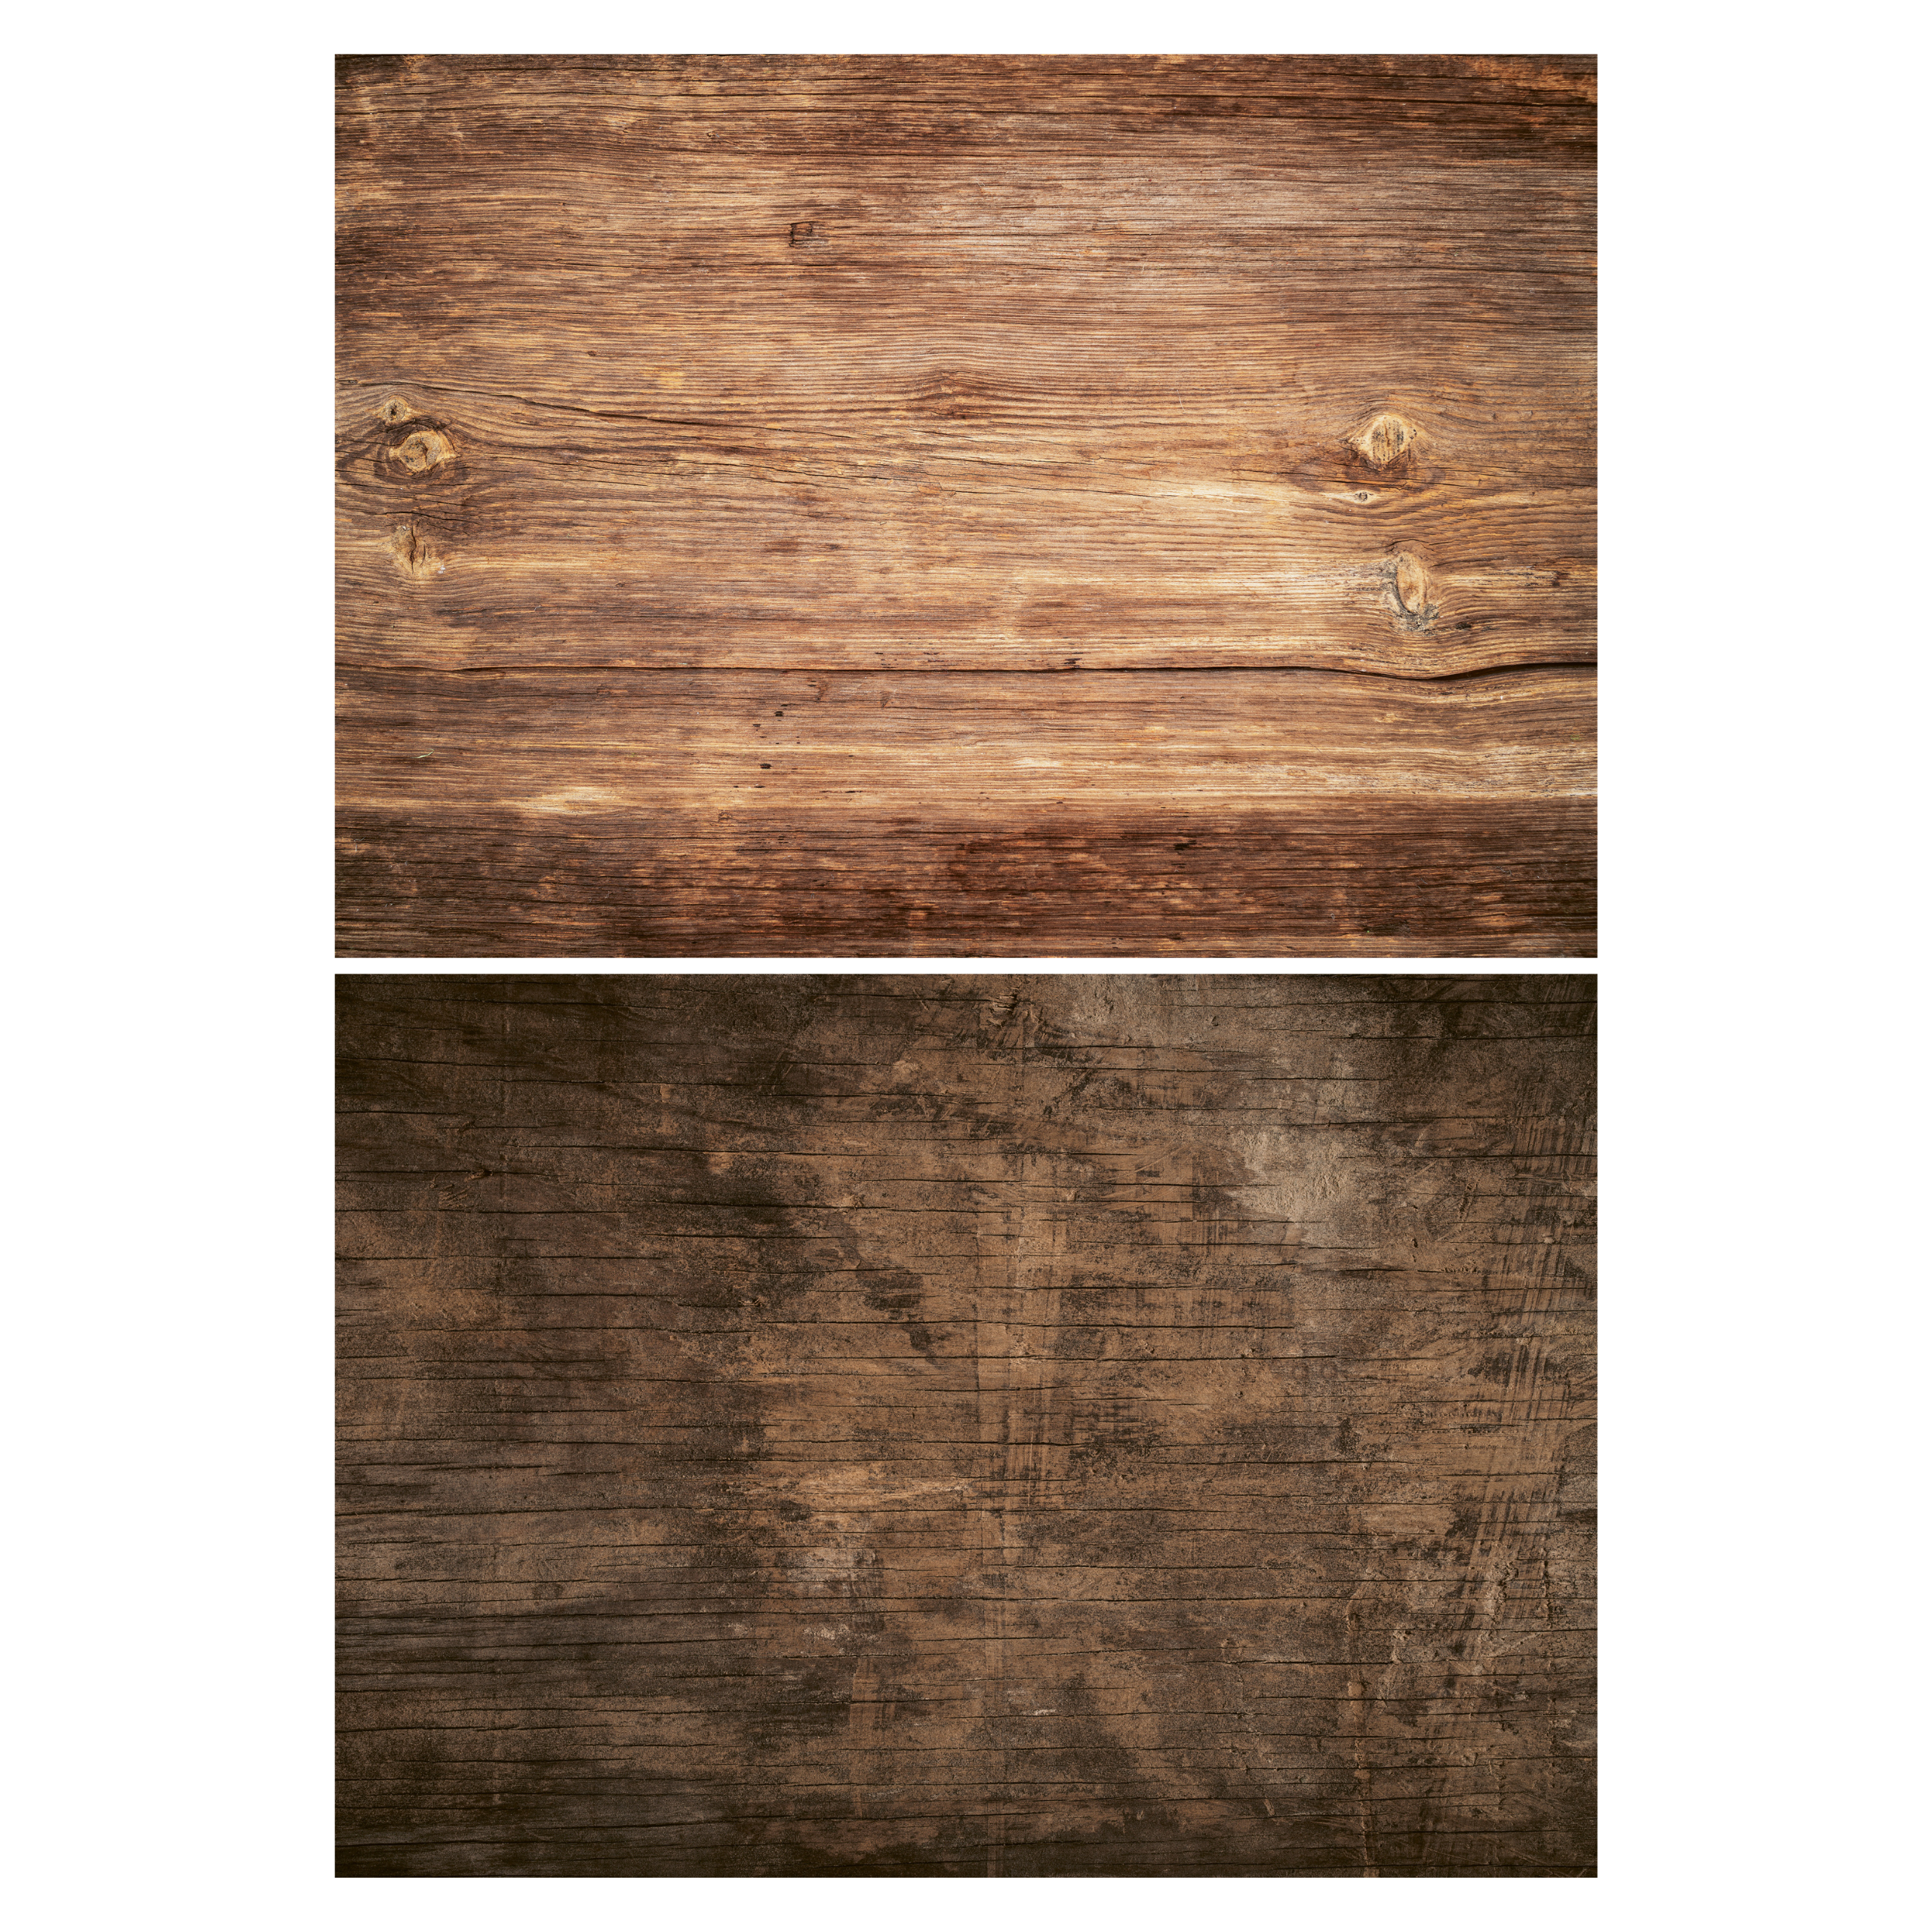 LENS-AID Flatlay Holz für passend Studiofotografie Fotografie, Makrofotografie, Holzfarben, Fotohintergrund, 67, Food Produktfotografie